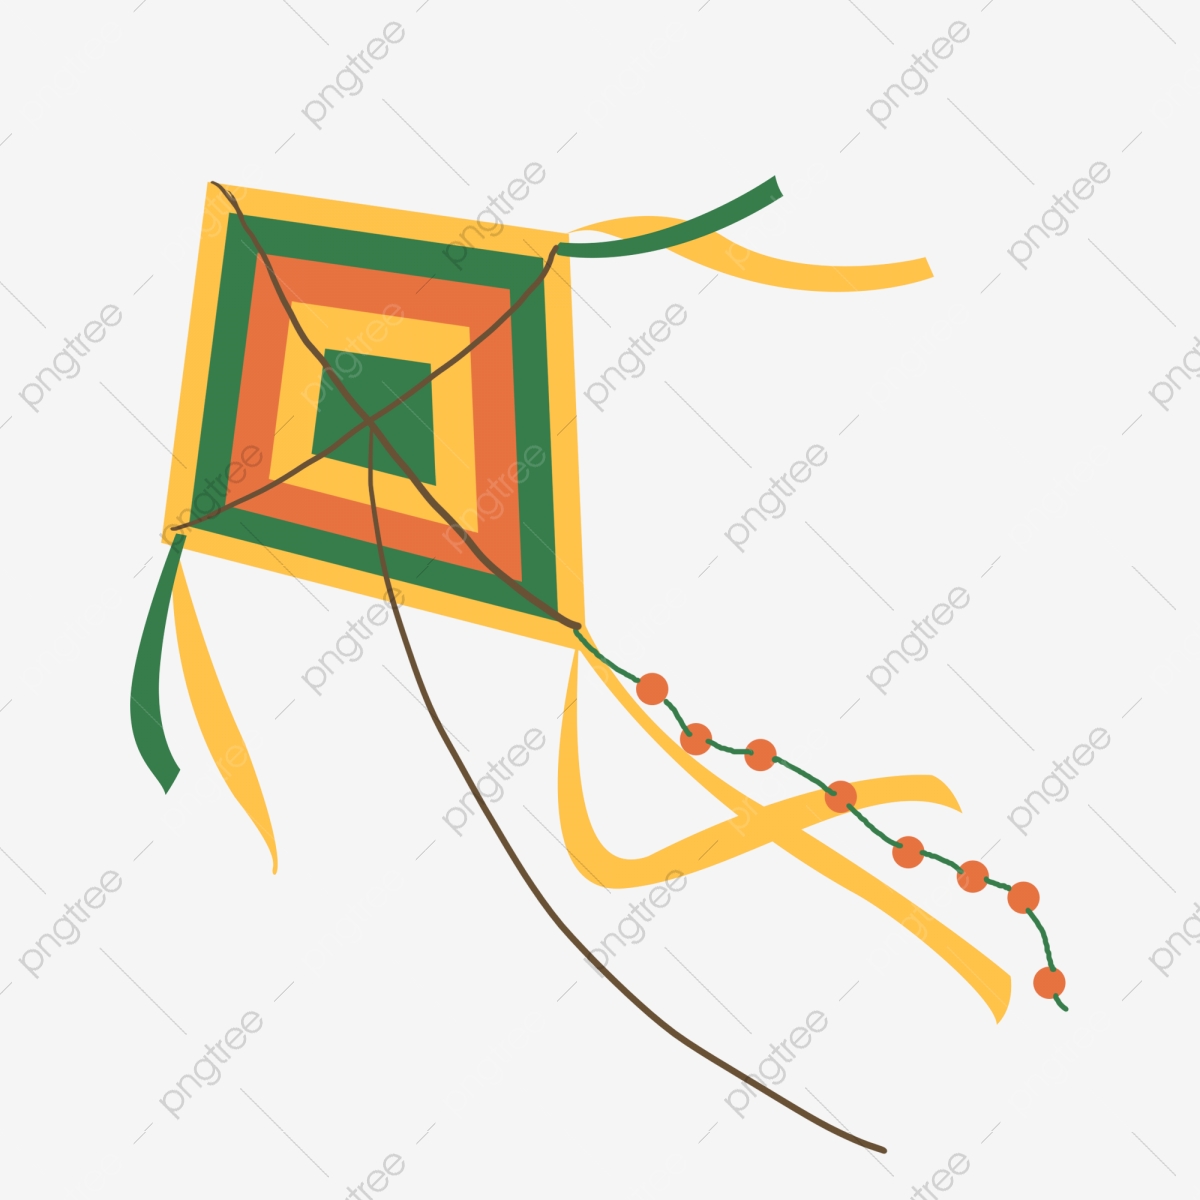 kite clipart long tail